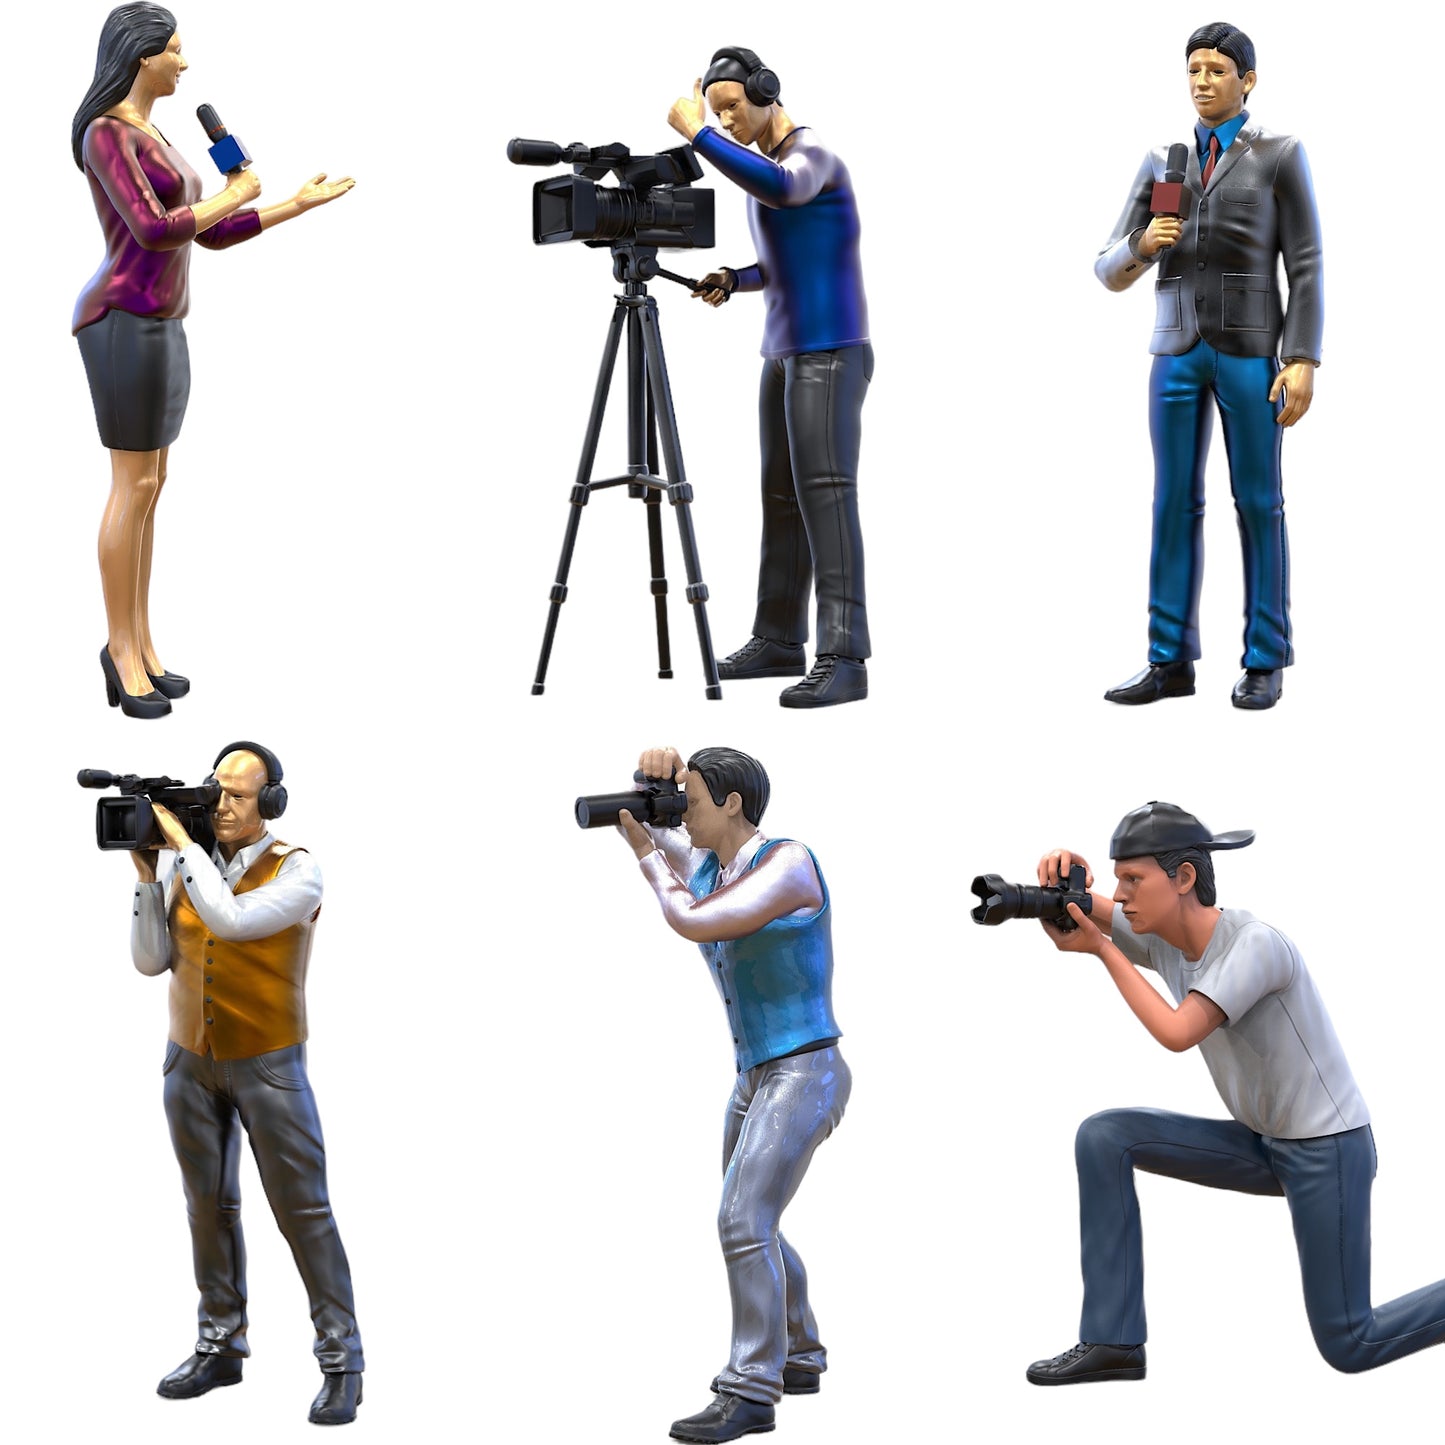 Produktfoto Diorama und Modellbau Miniatur Figur: Reporter Set, 6 Figuren